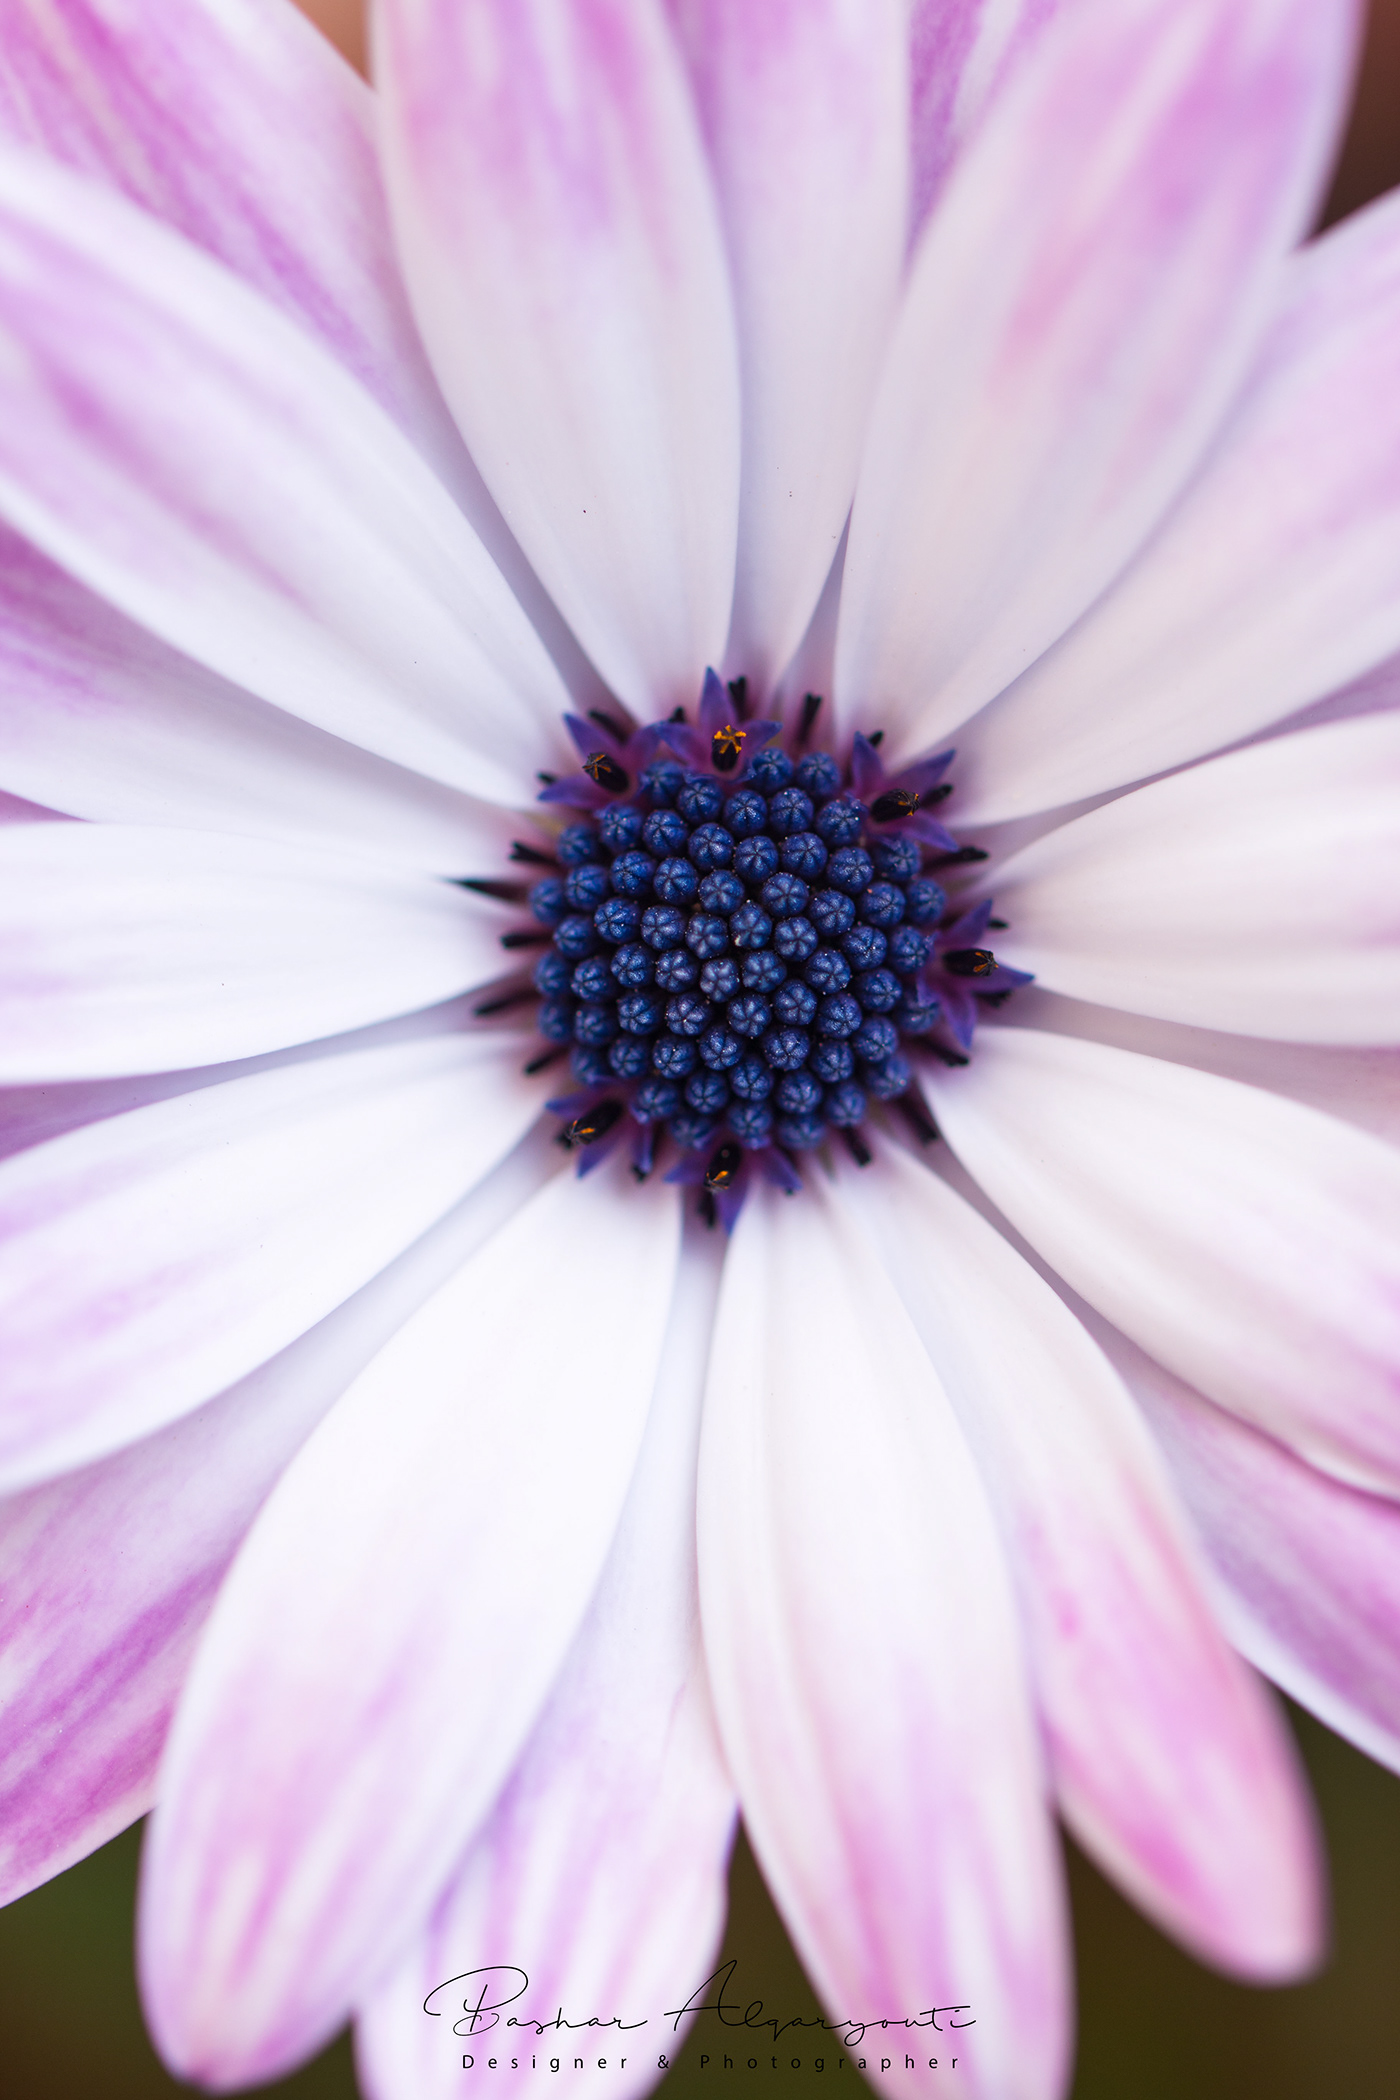 #flowers #Osteospermum #whitegerberdaisies #macrophotography #photography